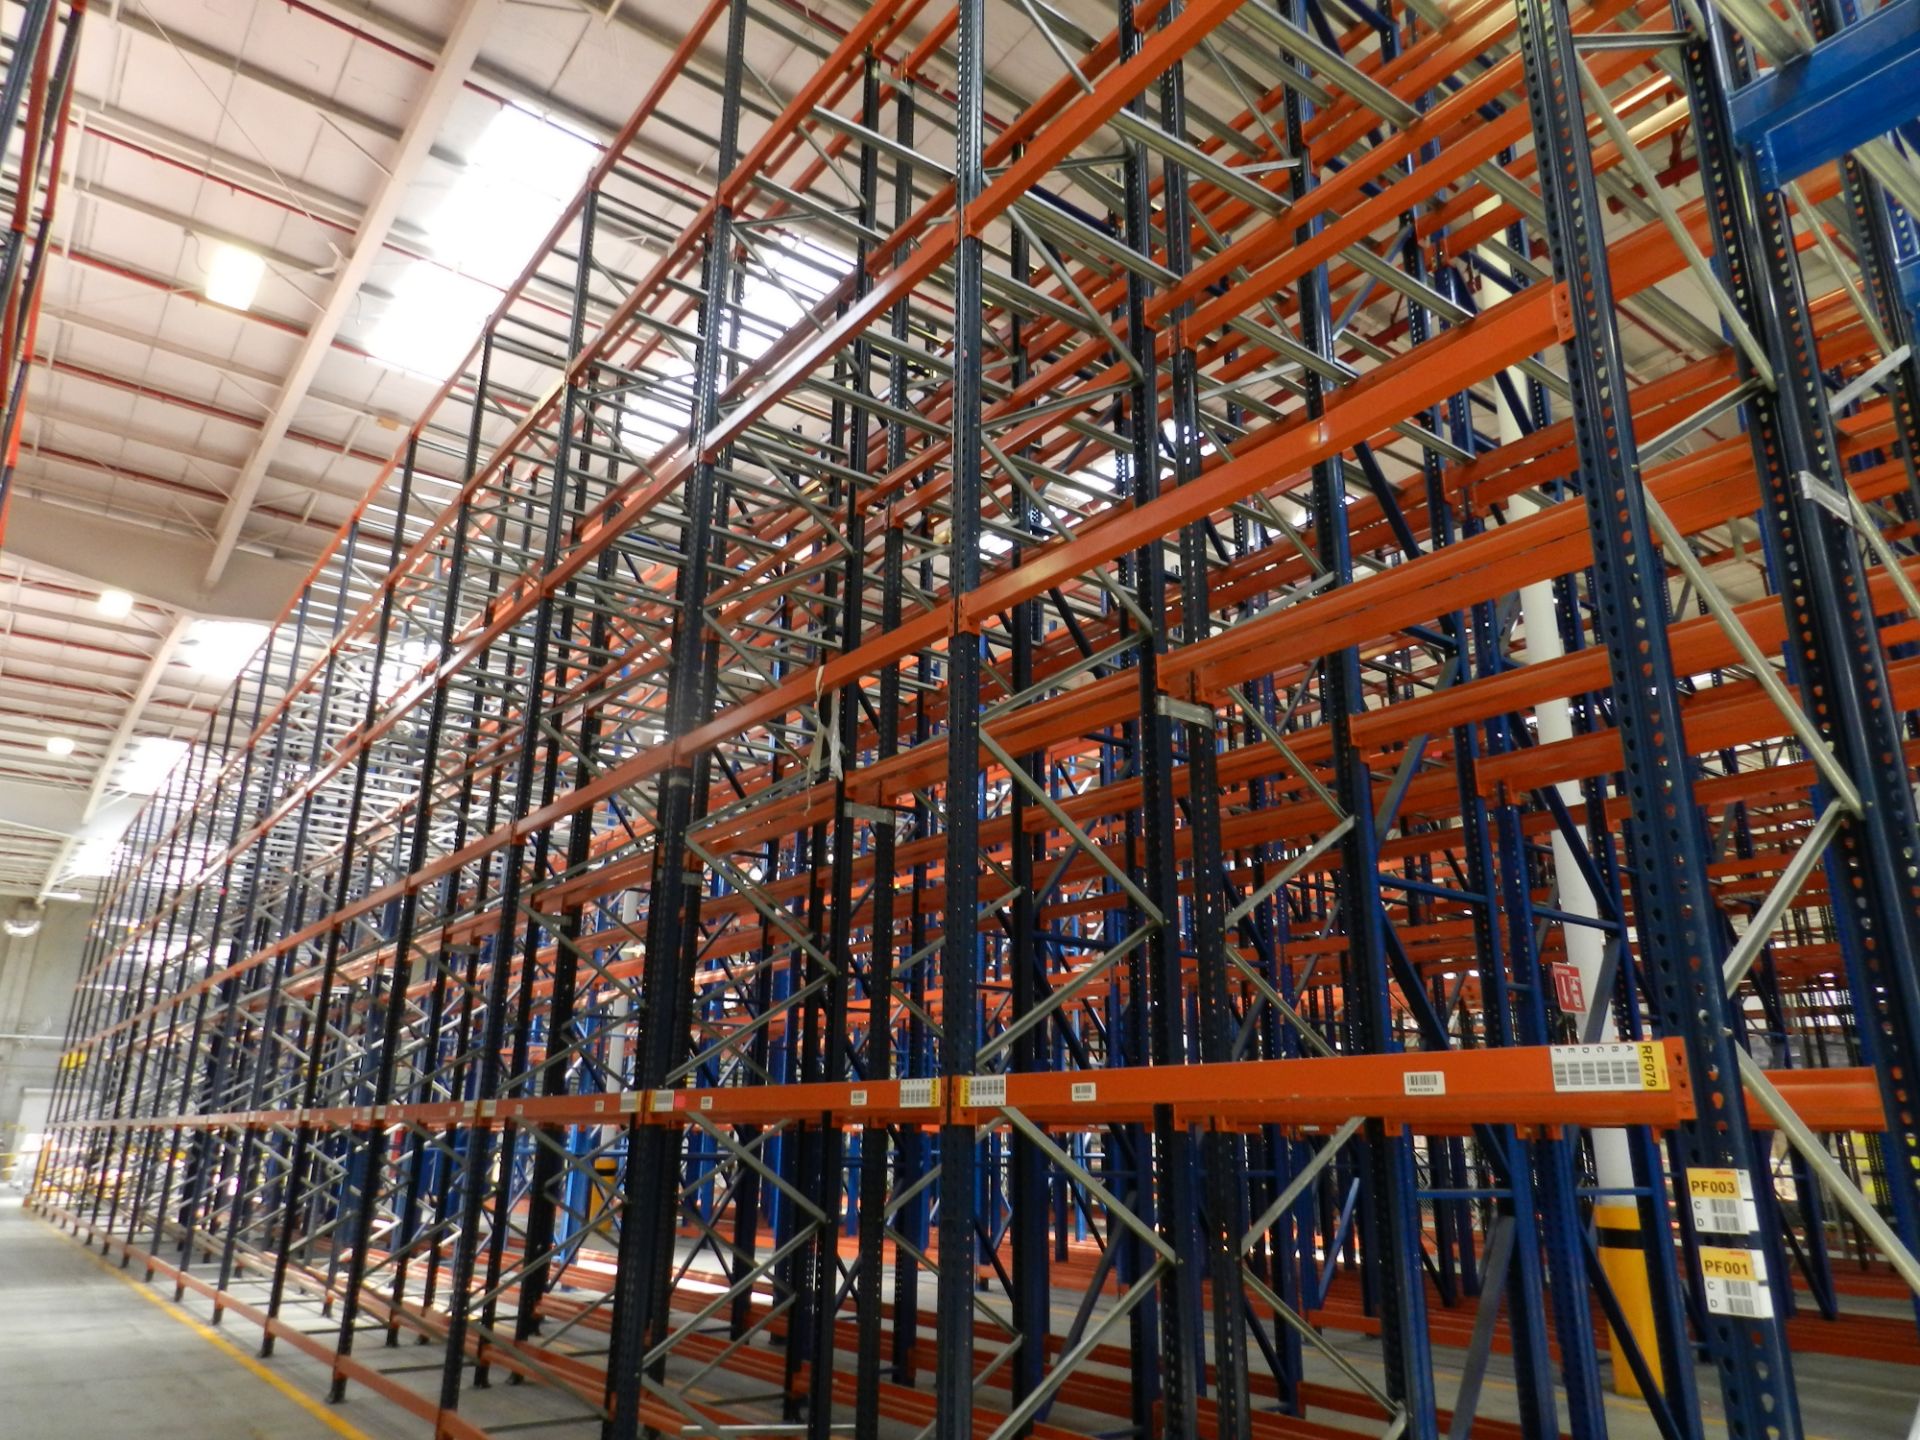 rack industrial de 50 m x 1.30 m x 8.90 m, 21 postes (azules) y 160 travesaños (naranjas) longitud - Image 12 of 12